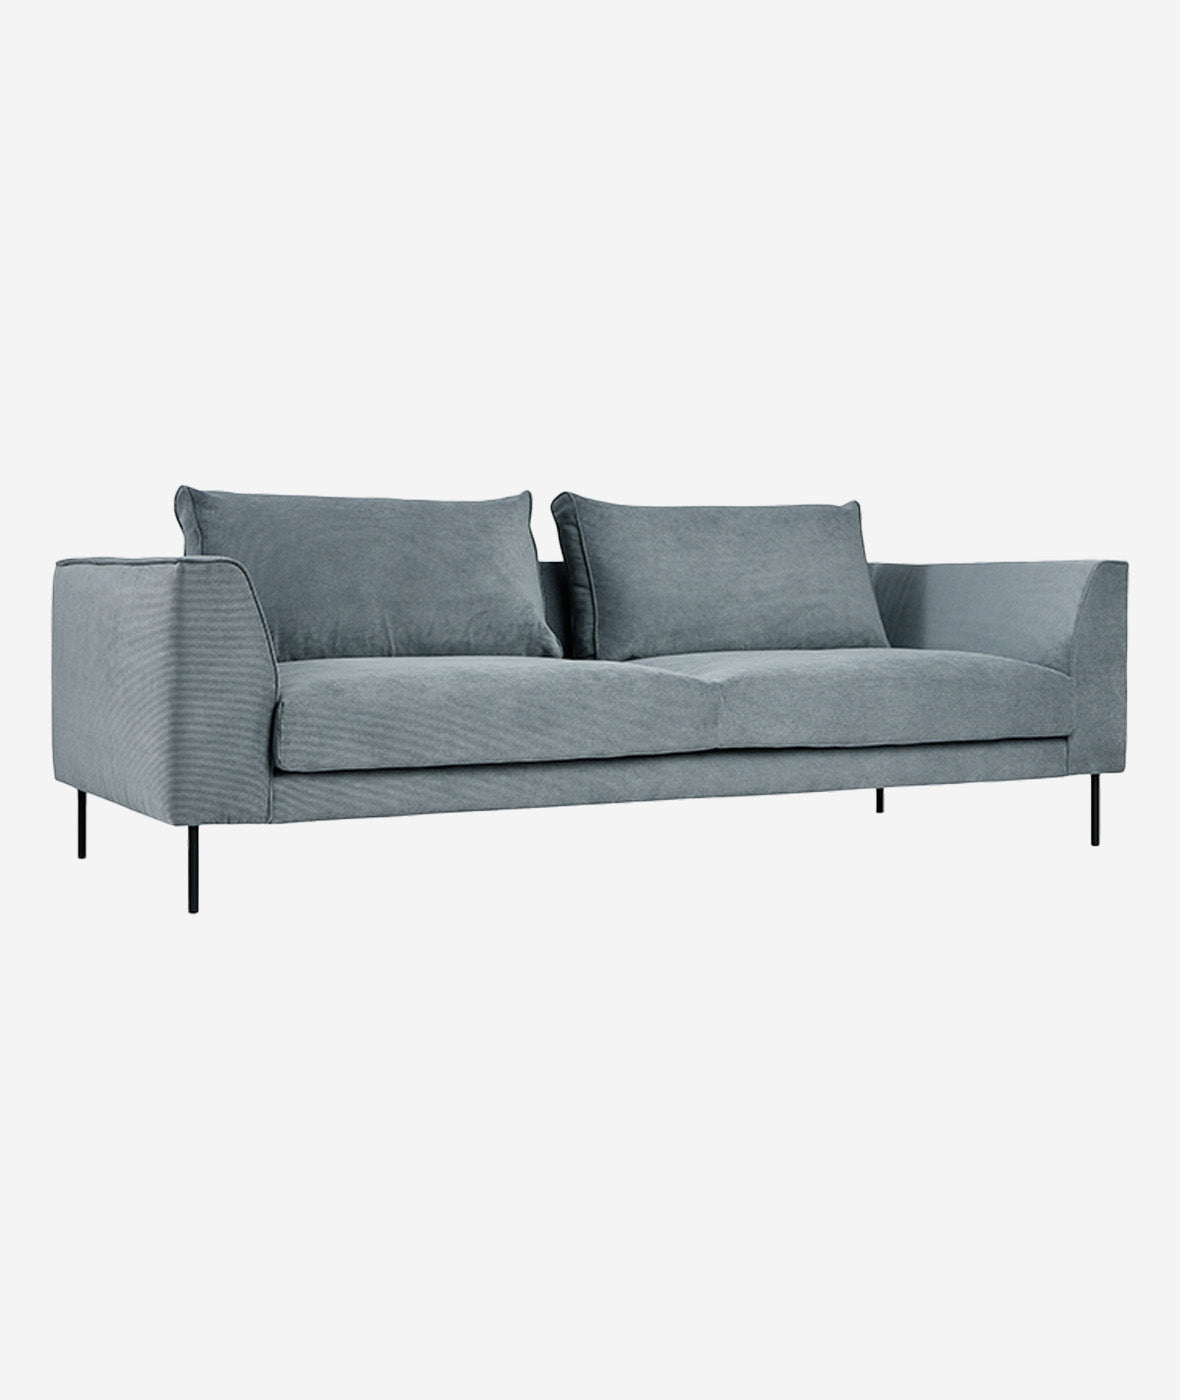 Renfrew Sofa - More Options